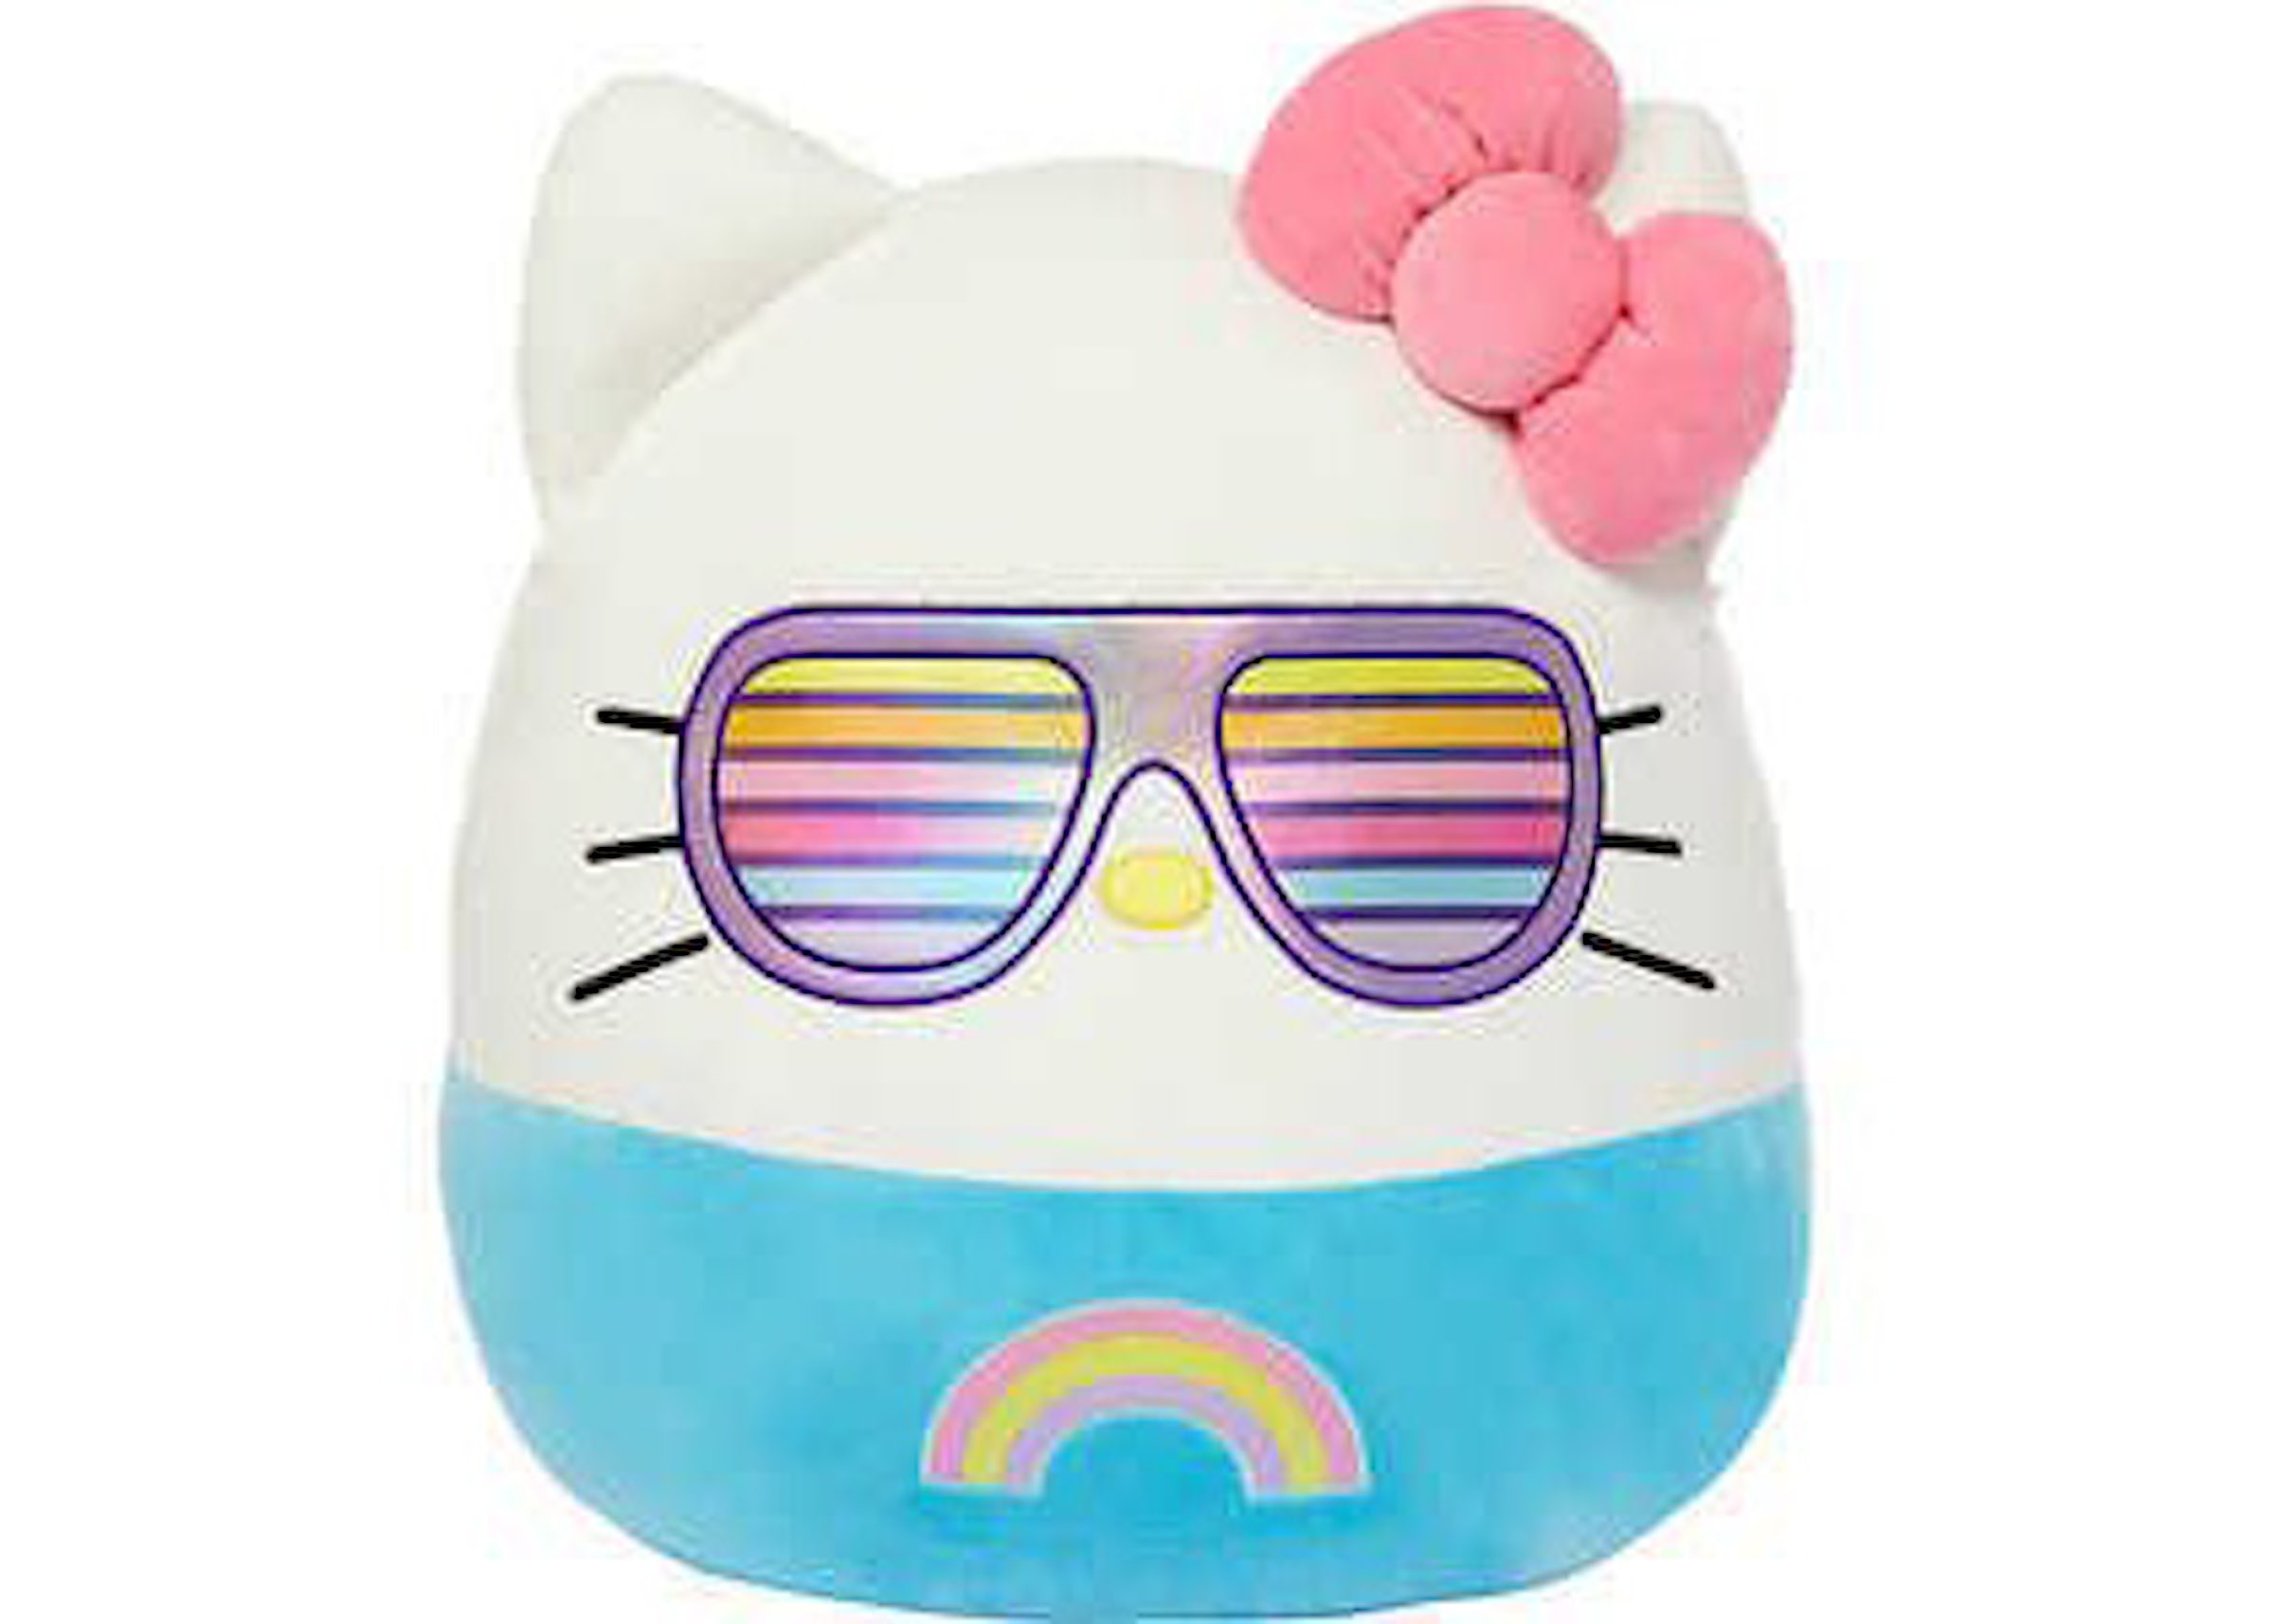 Squishmallow Sanrio Hello Kitty Sunglasses 20 Inch Plush Blue/White - SS21  - US